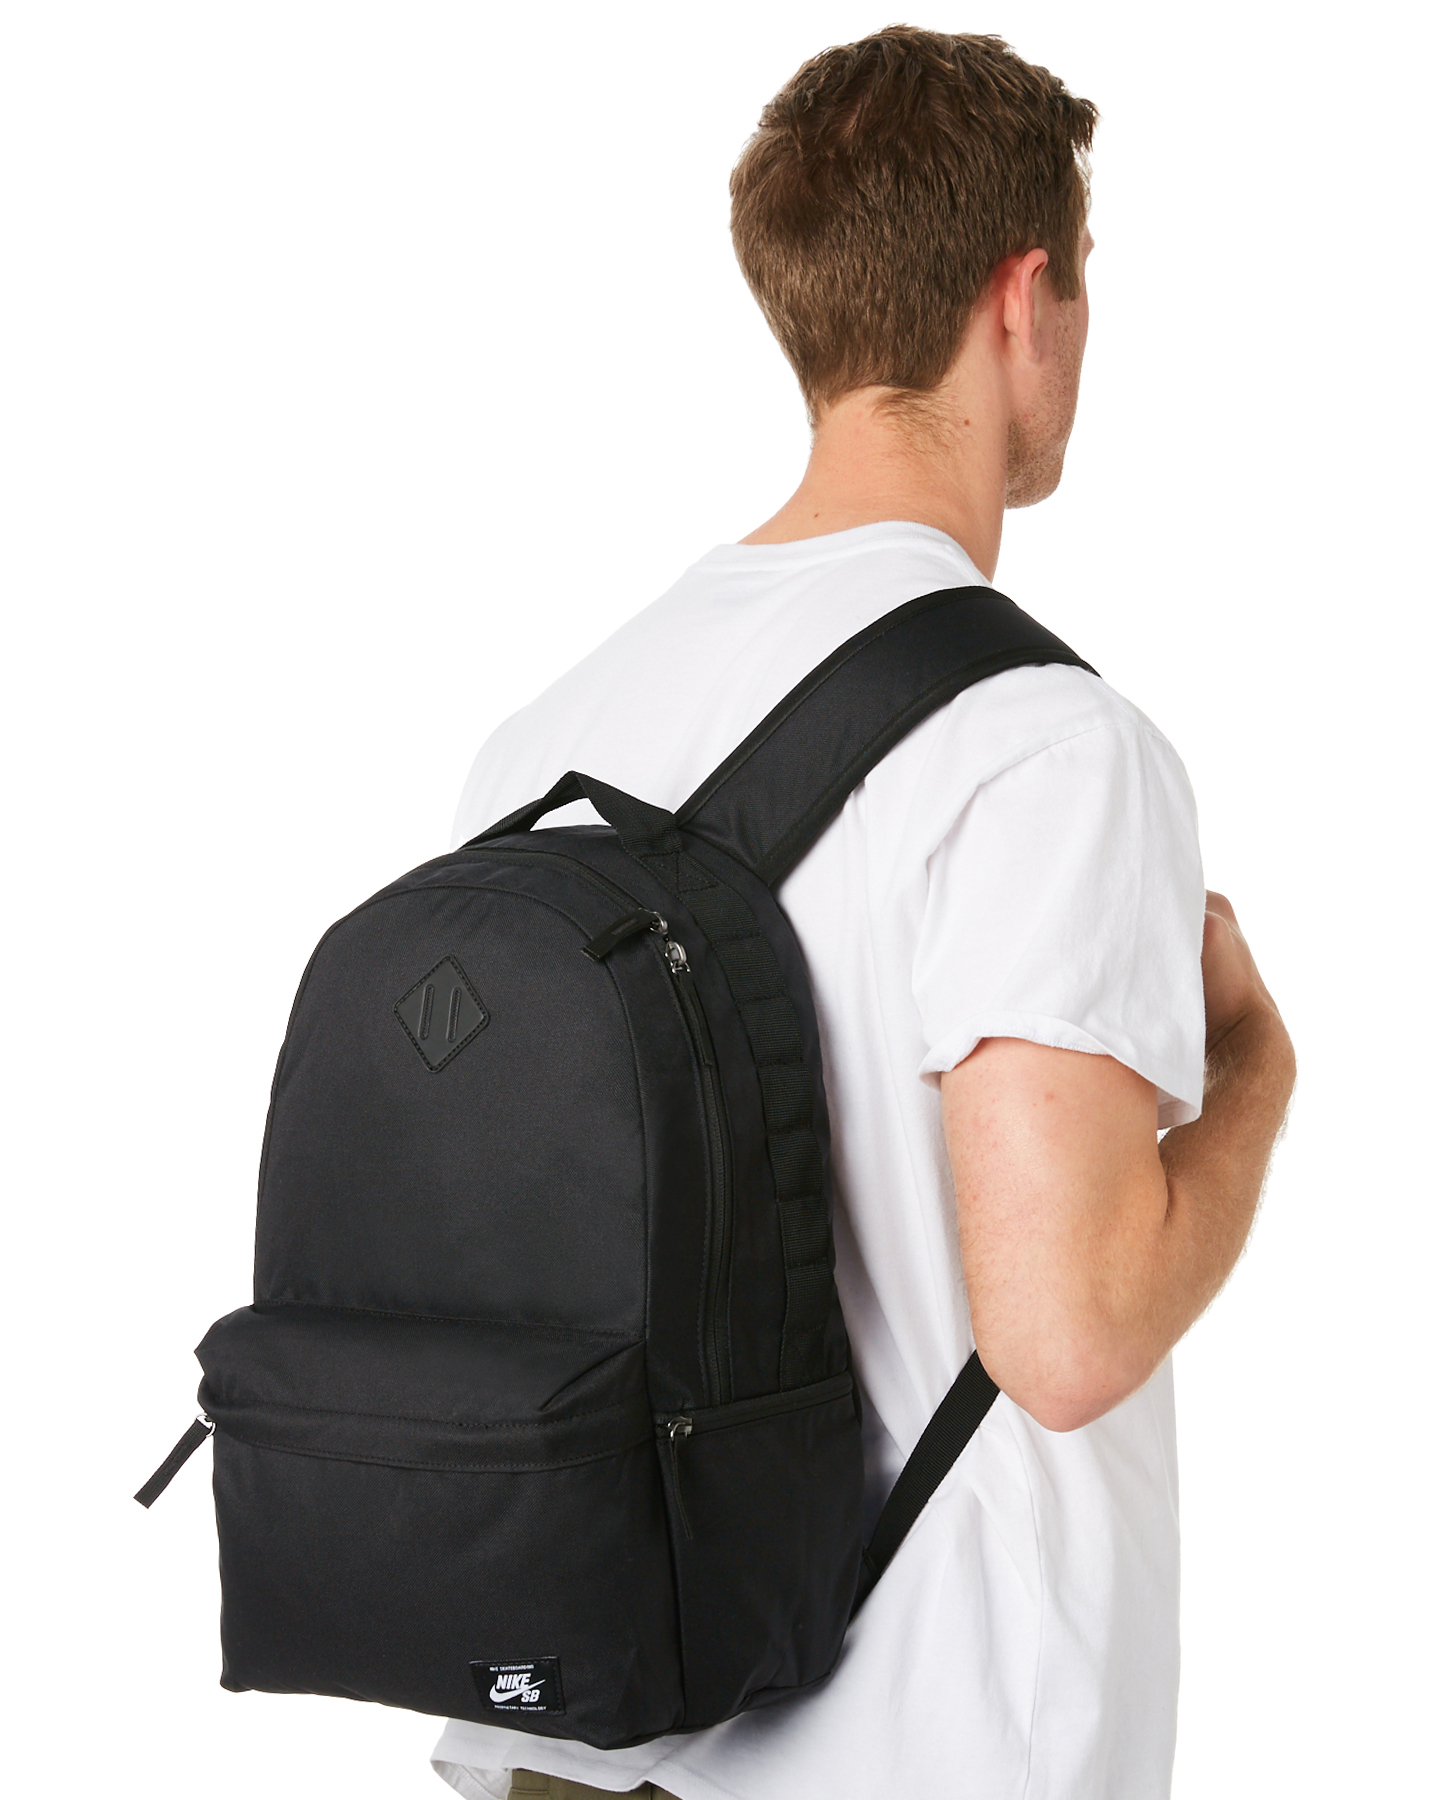 nike sb icon backpack black